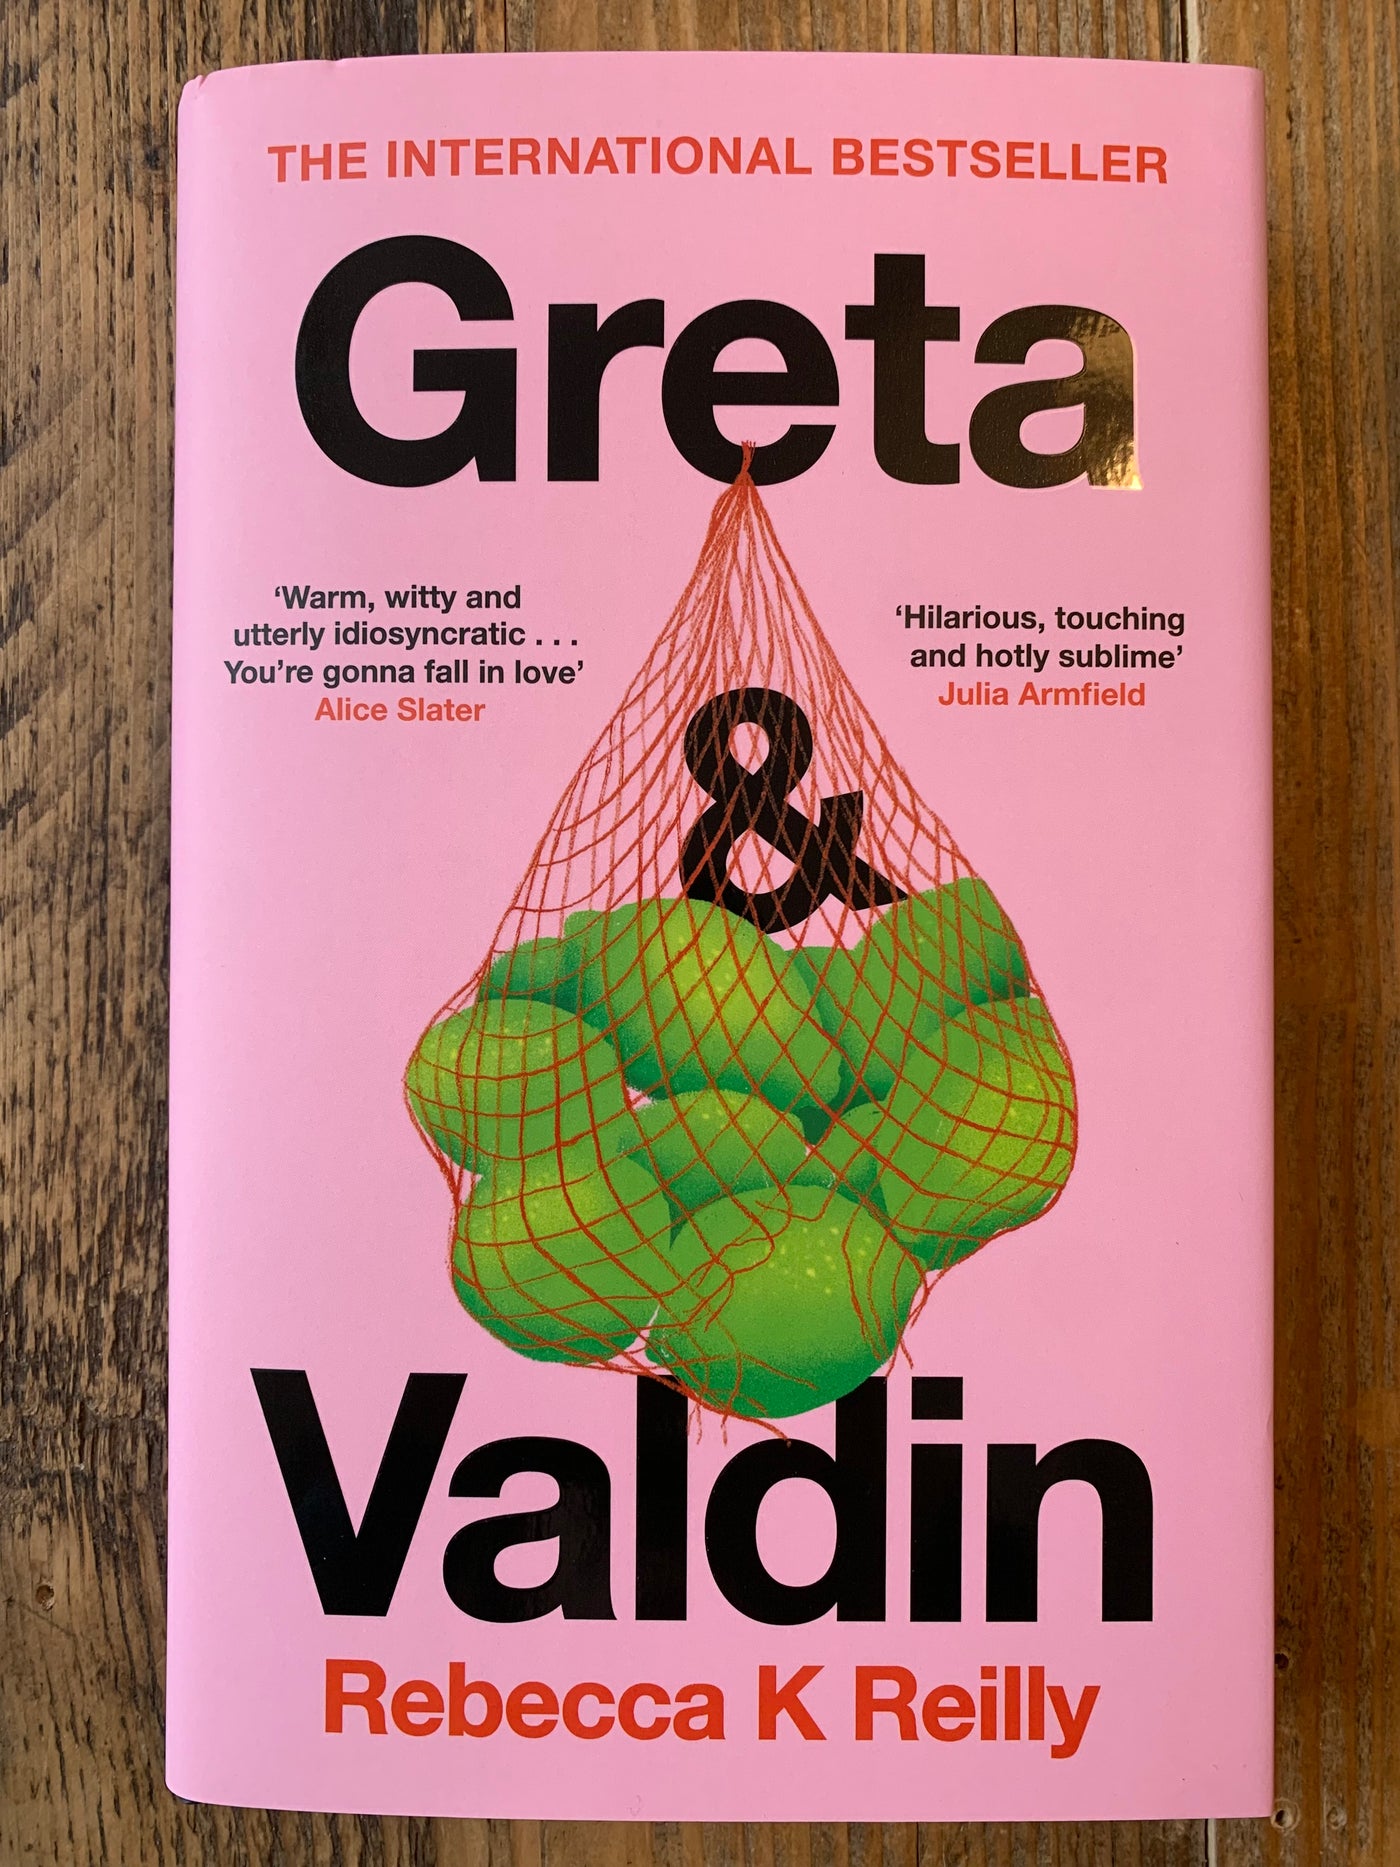 Greta & Valdin